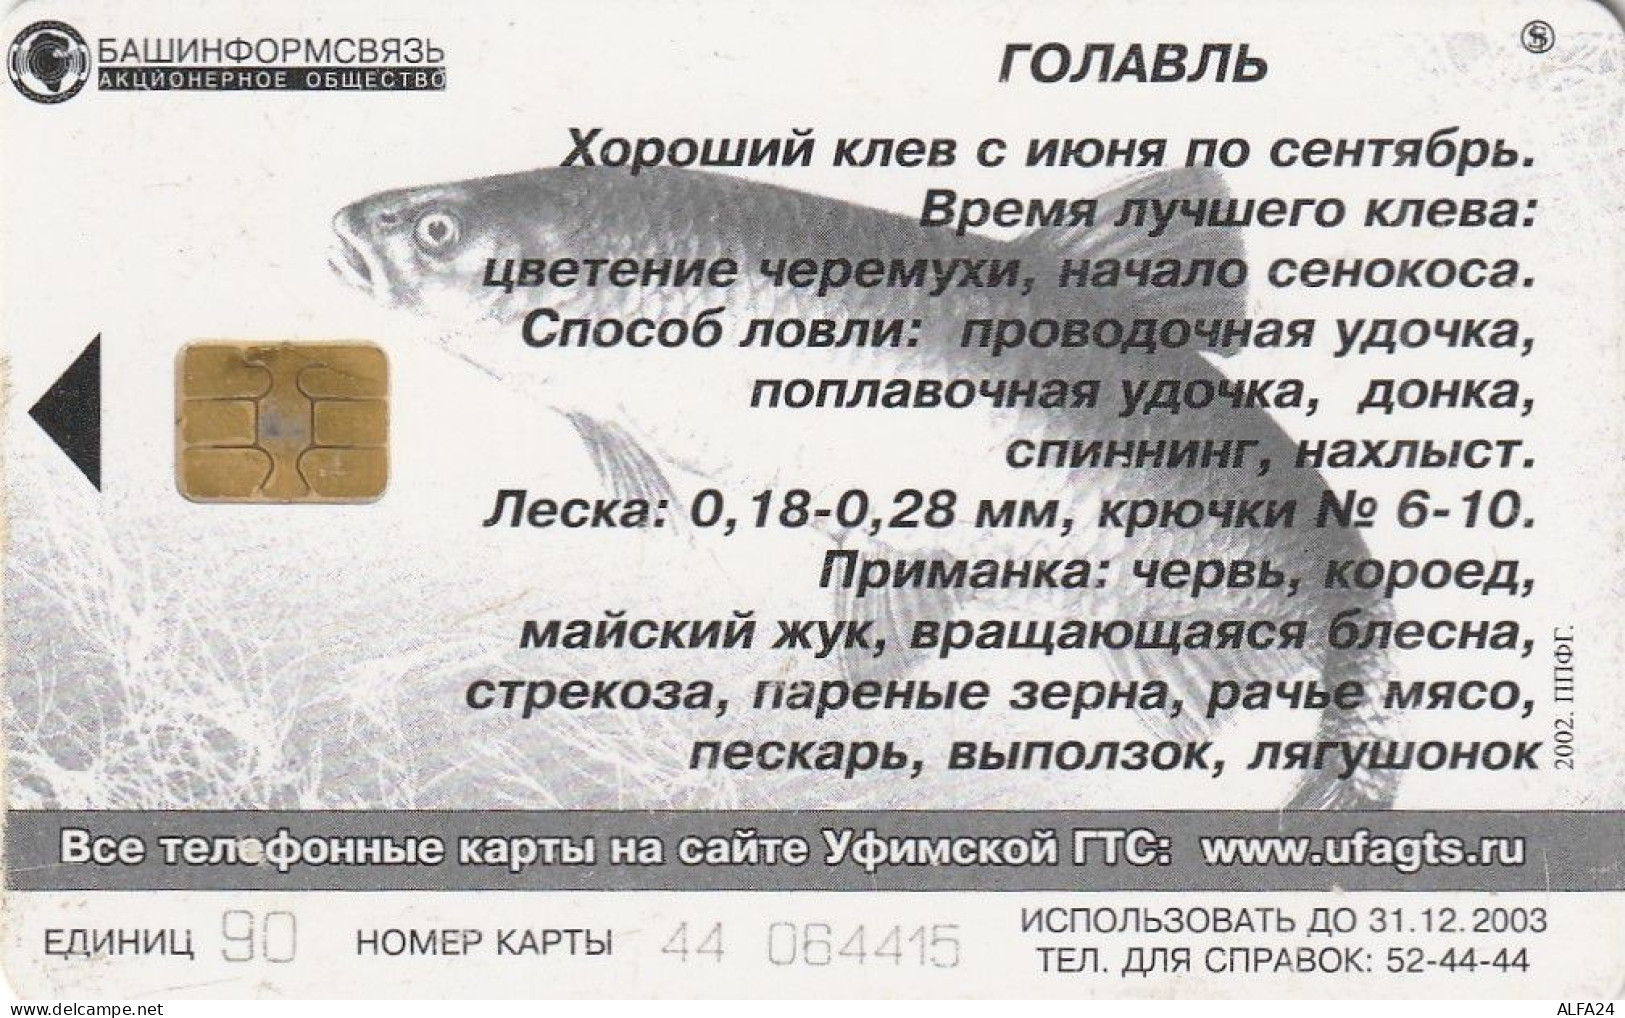 PHONE CARD RUSSIA Bashinformsvyaz - Ufa (E100.7.5 - Russia